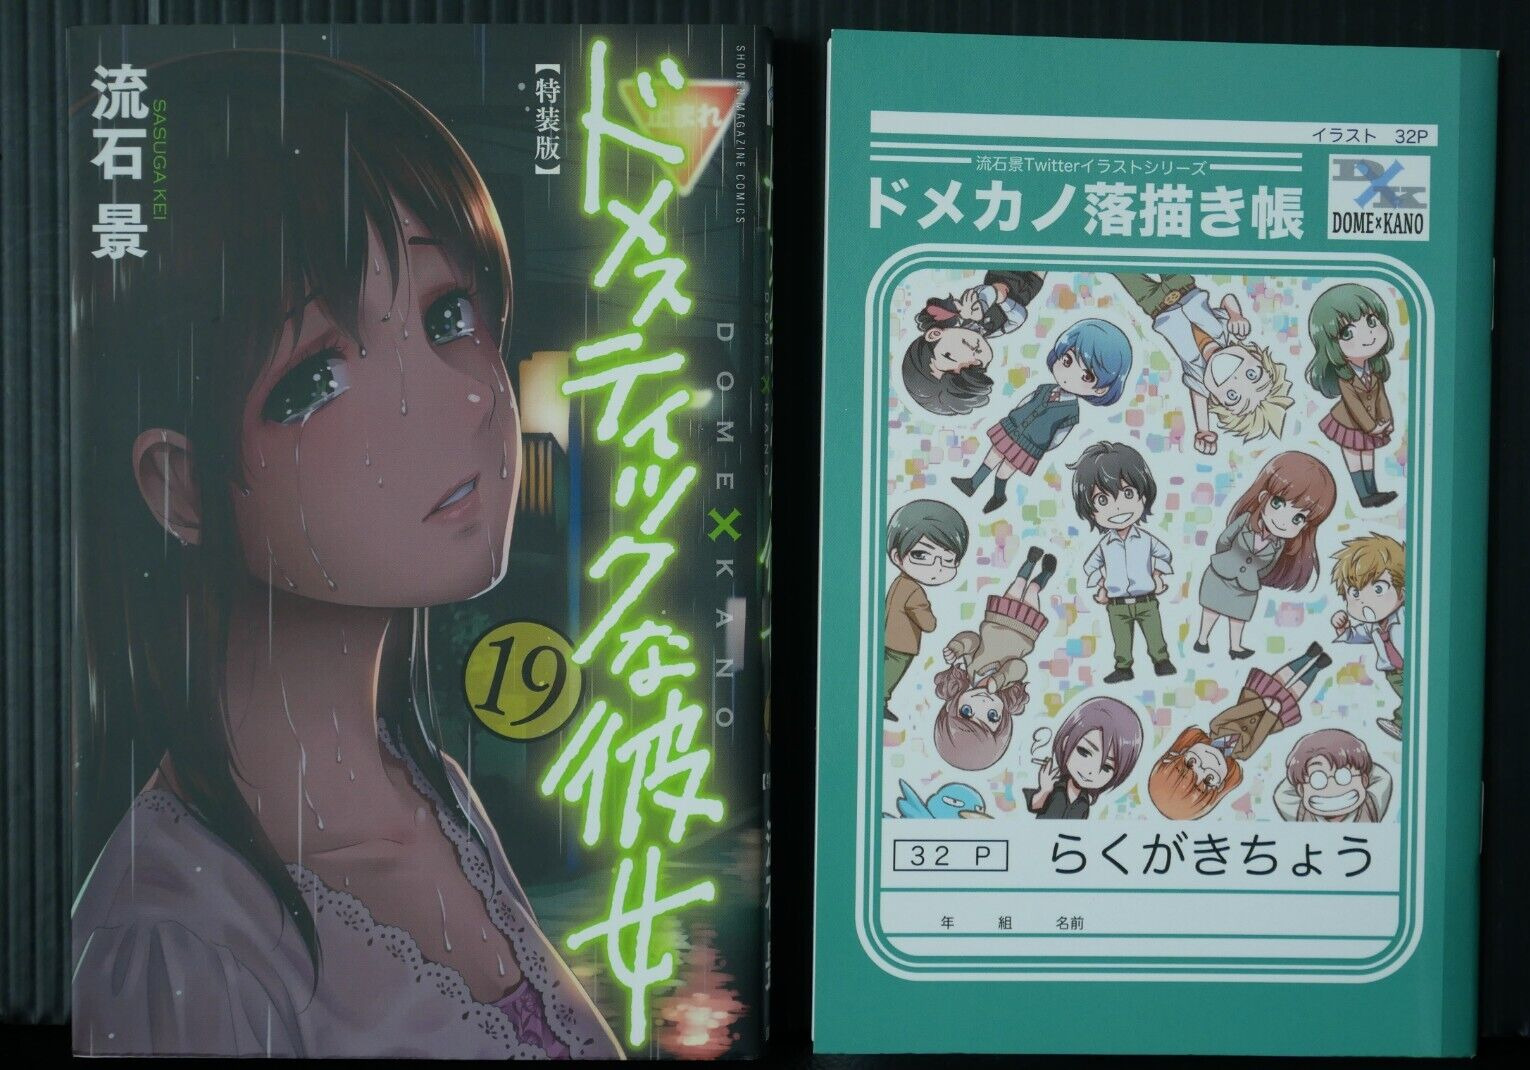 Domestic Girlfriend vol.19 - Special Edition Manga by Kei Sasuga - JAPAN